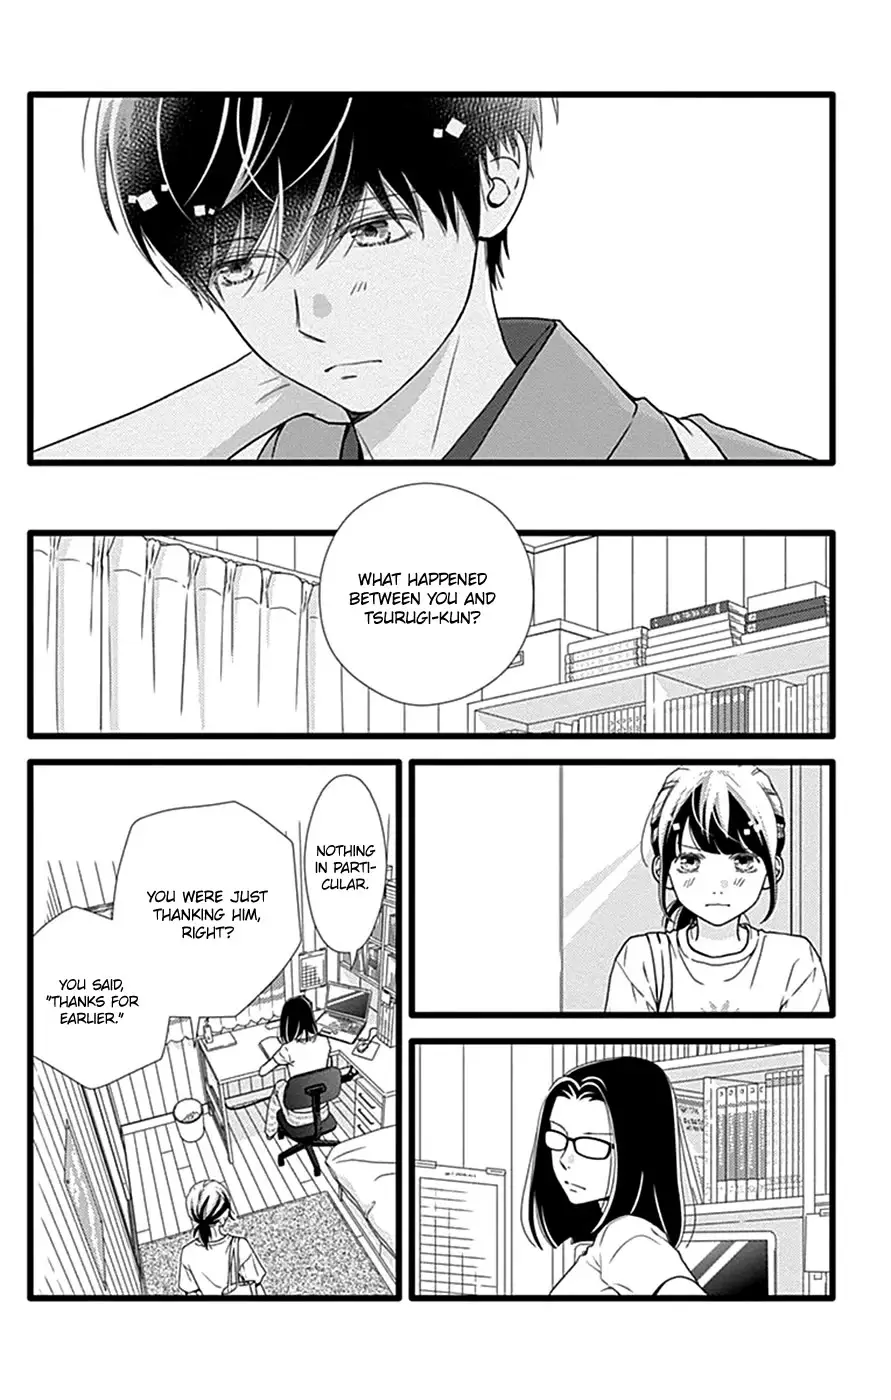 What An Average Way Koiko Goes! - 43 page 5-e2de4c7d